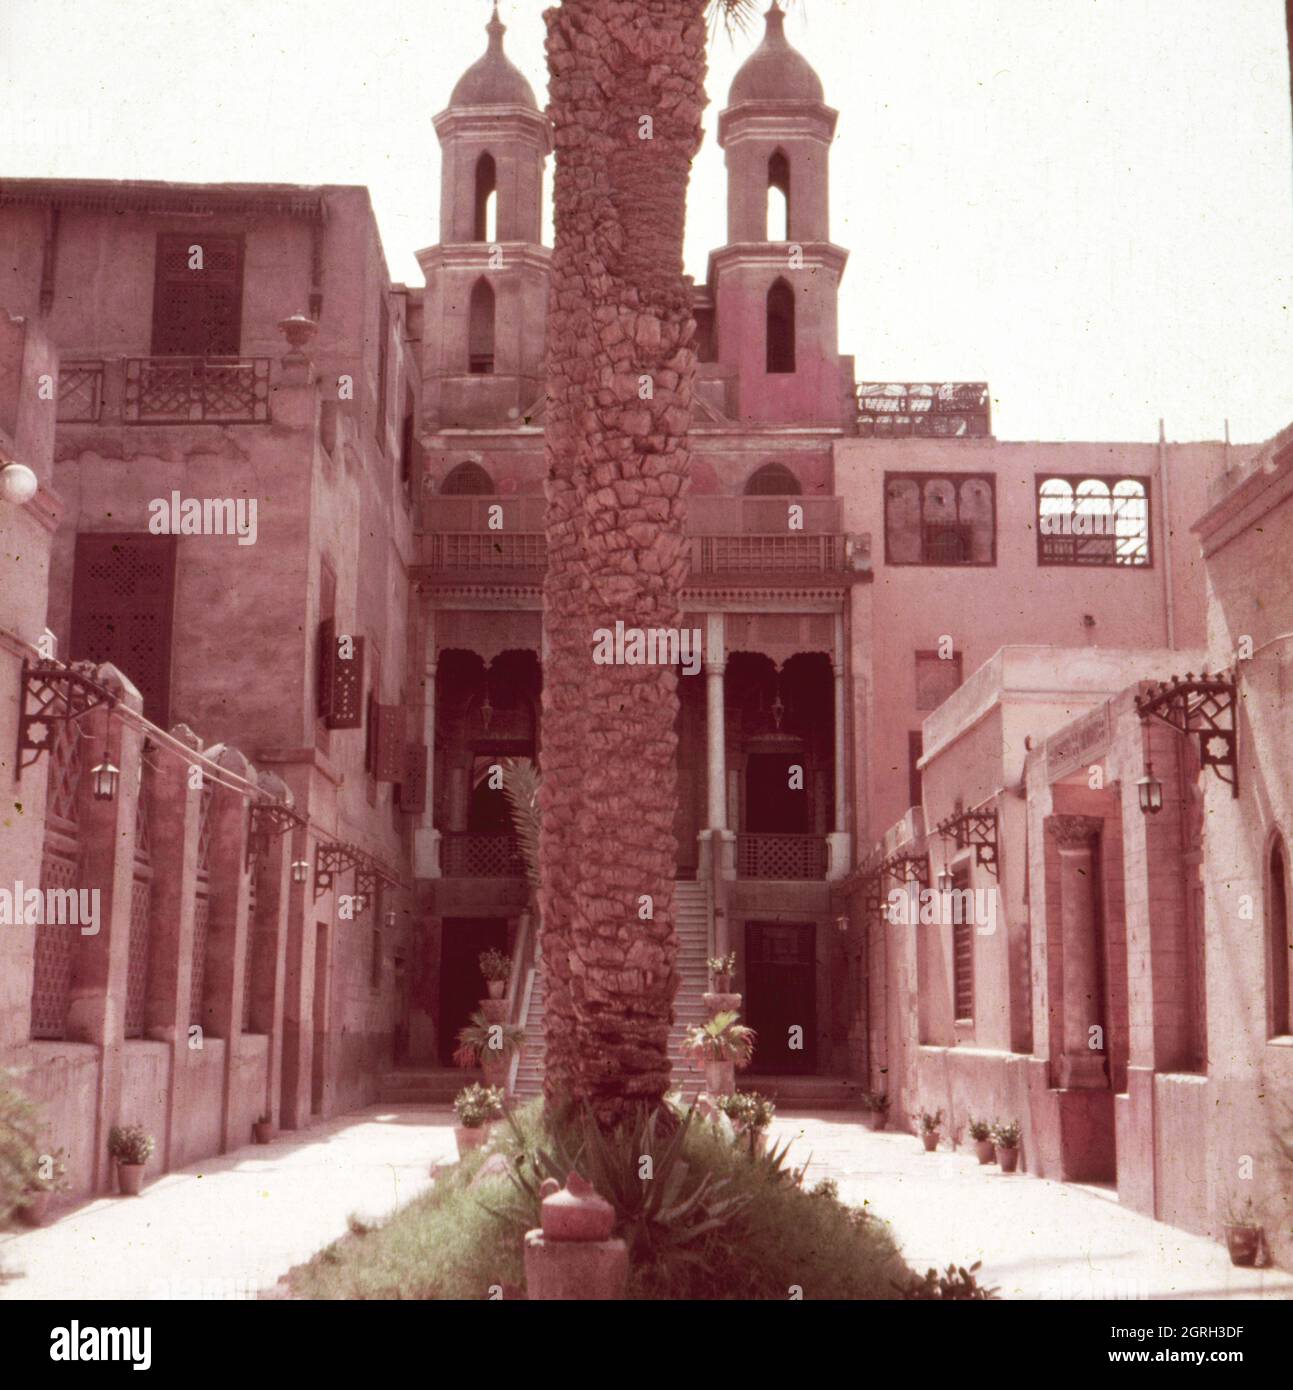 Koptische Mar Girgis Kirche in Kairo, Ägypten 1955. Coptic Mar Girgis church at Cairo, Egypt 1955. Stock Photo